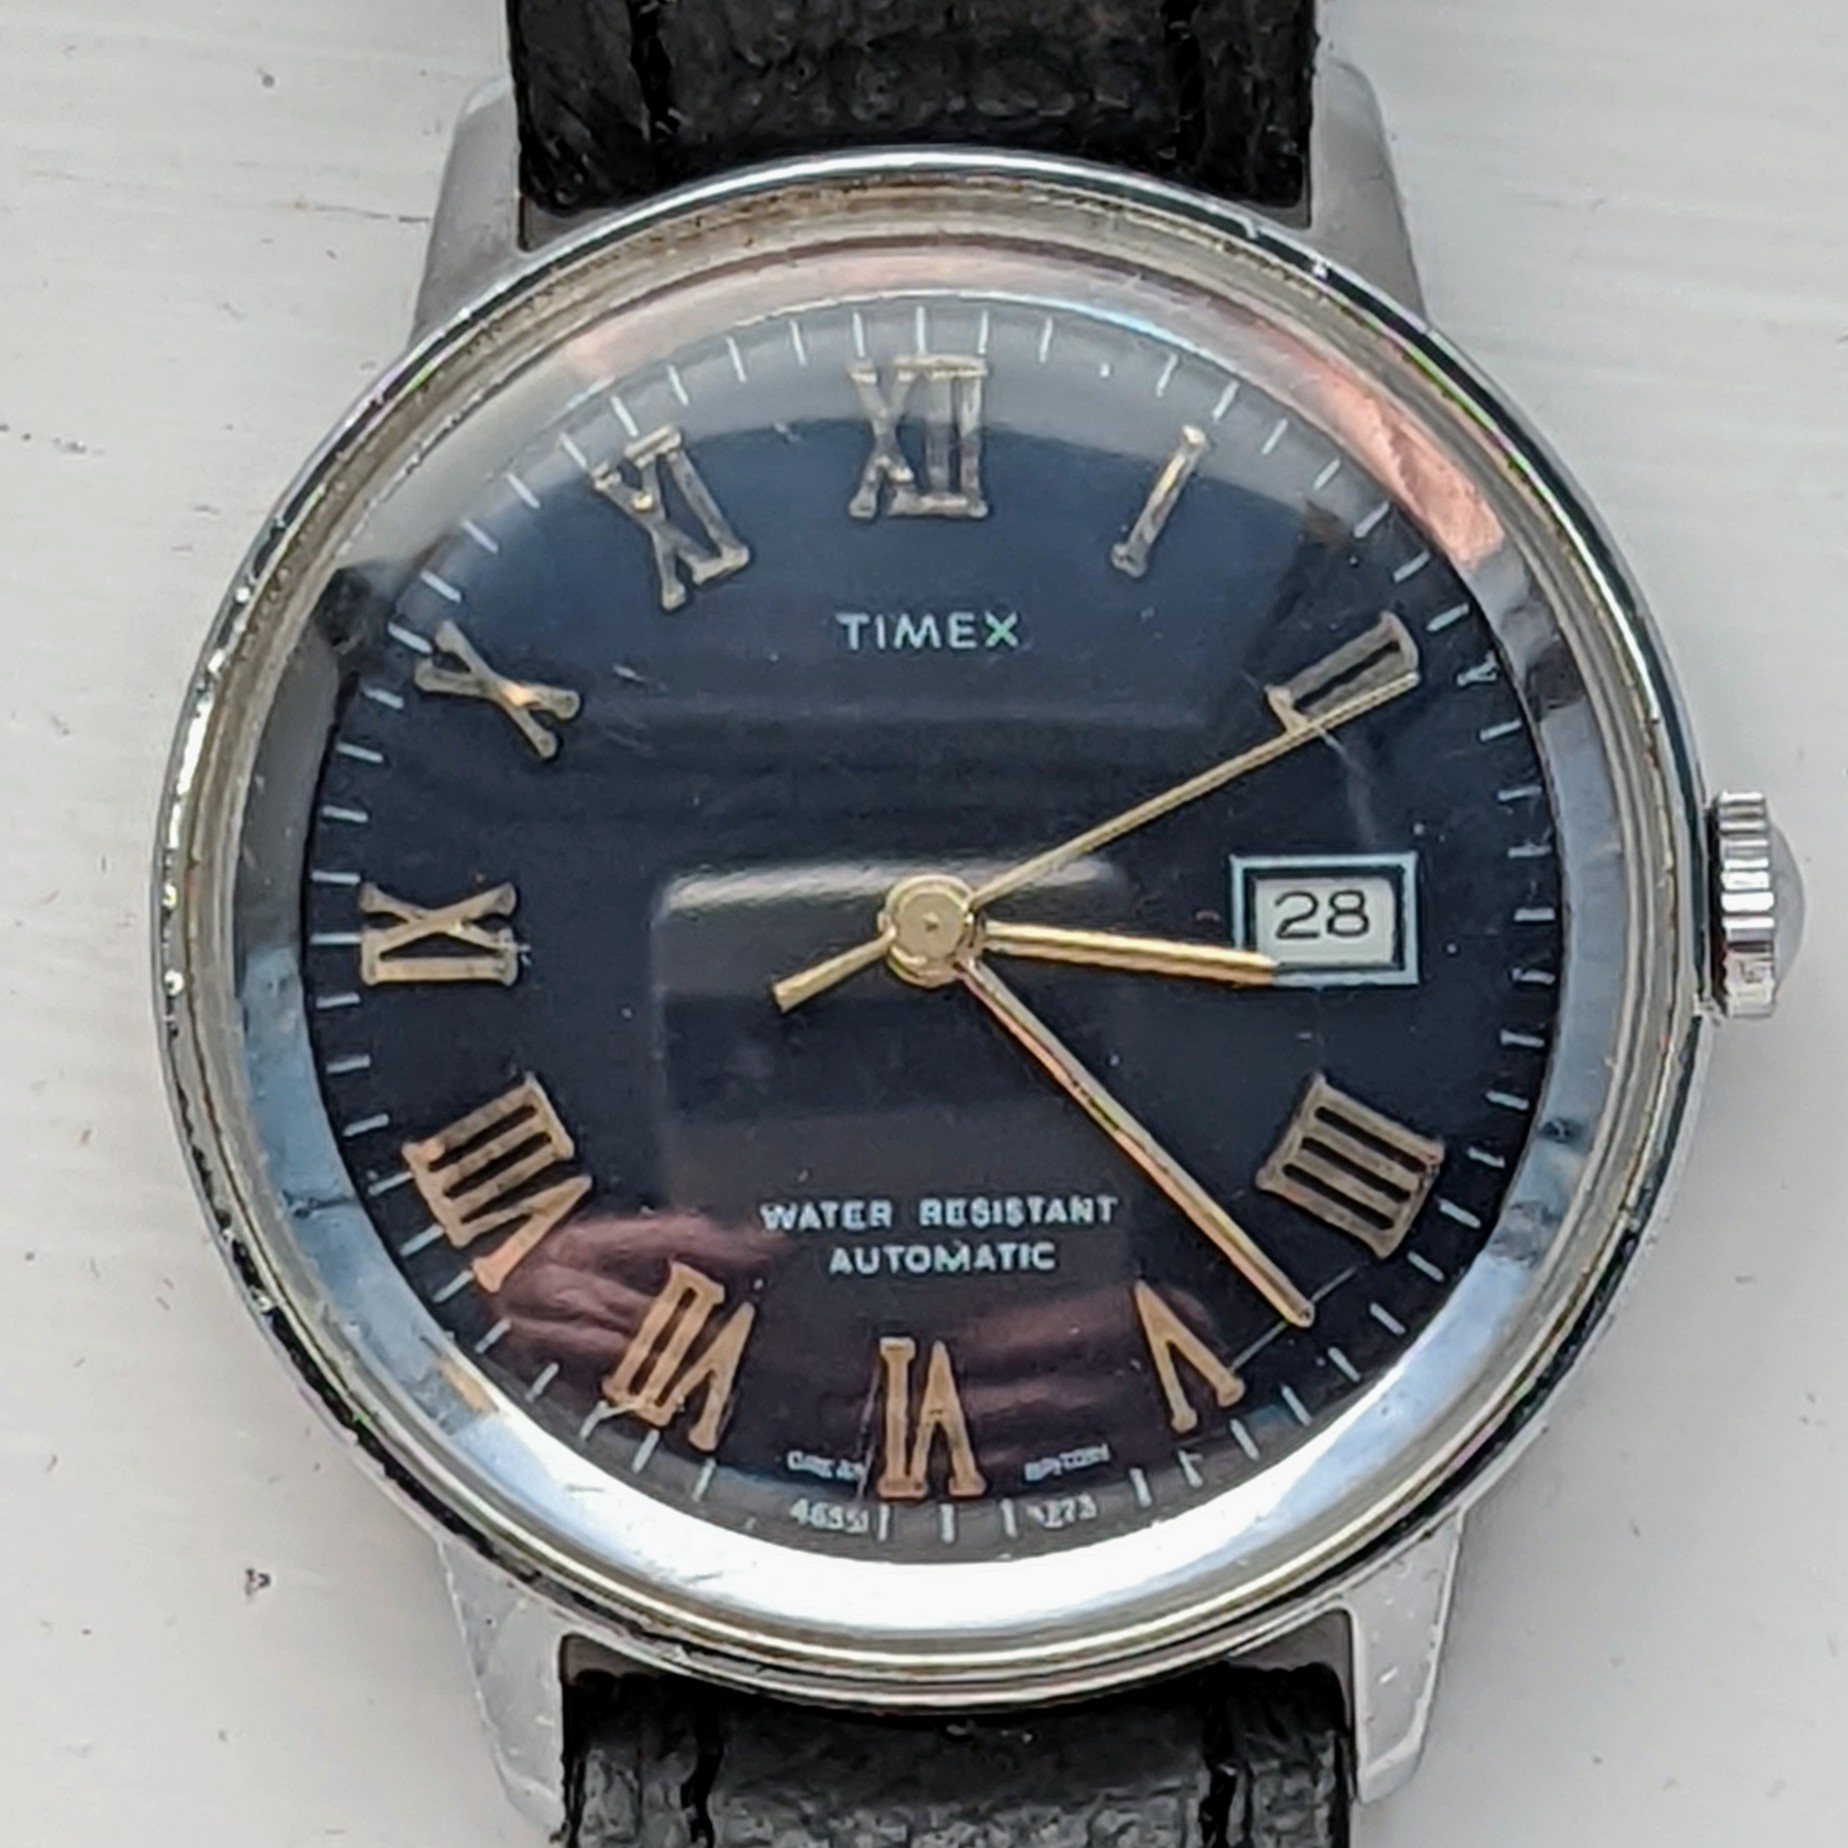 Timex Viscount 46551 3273 [1973]